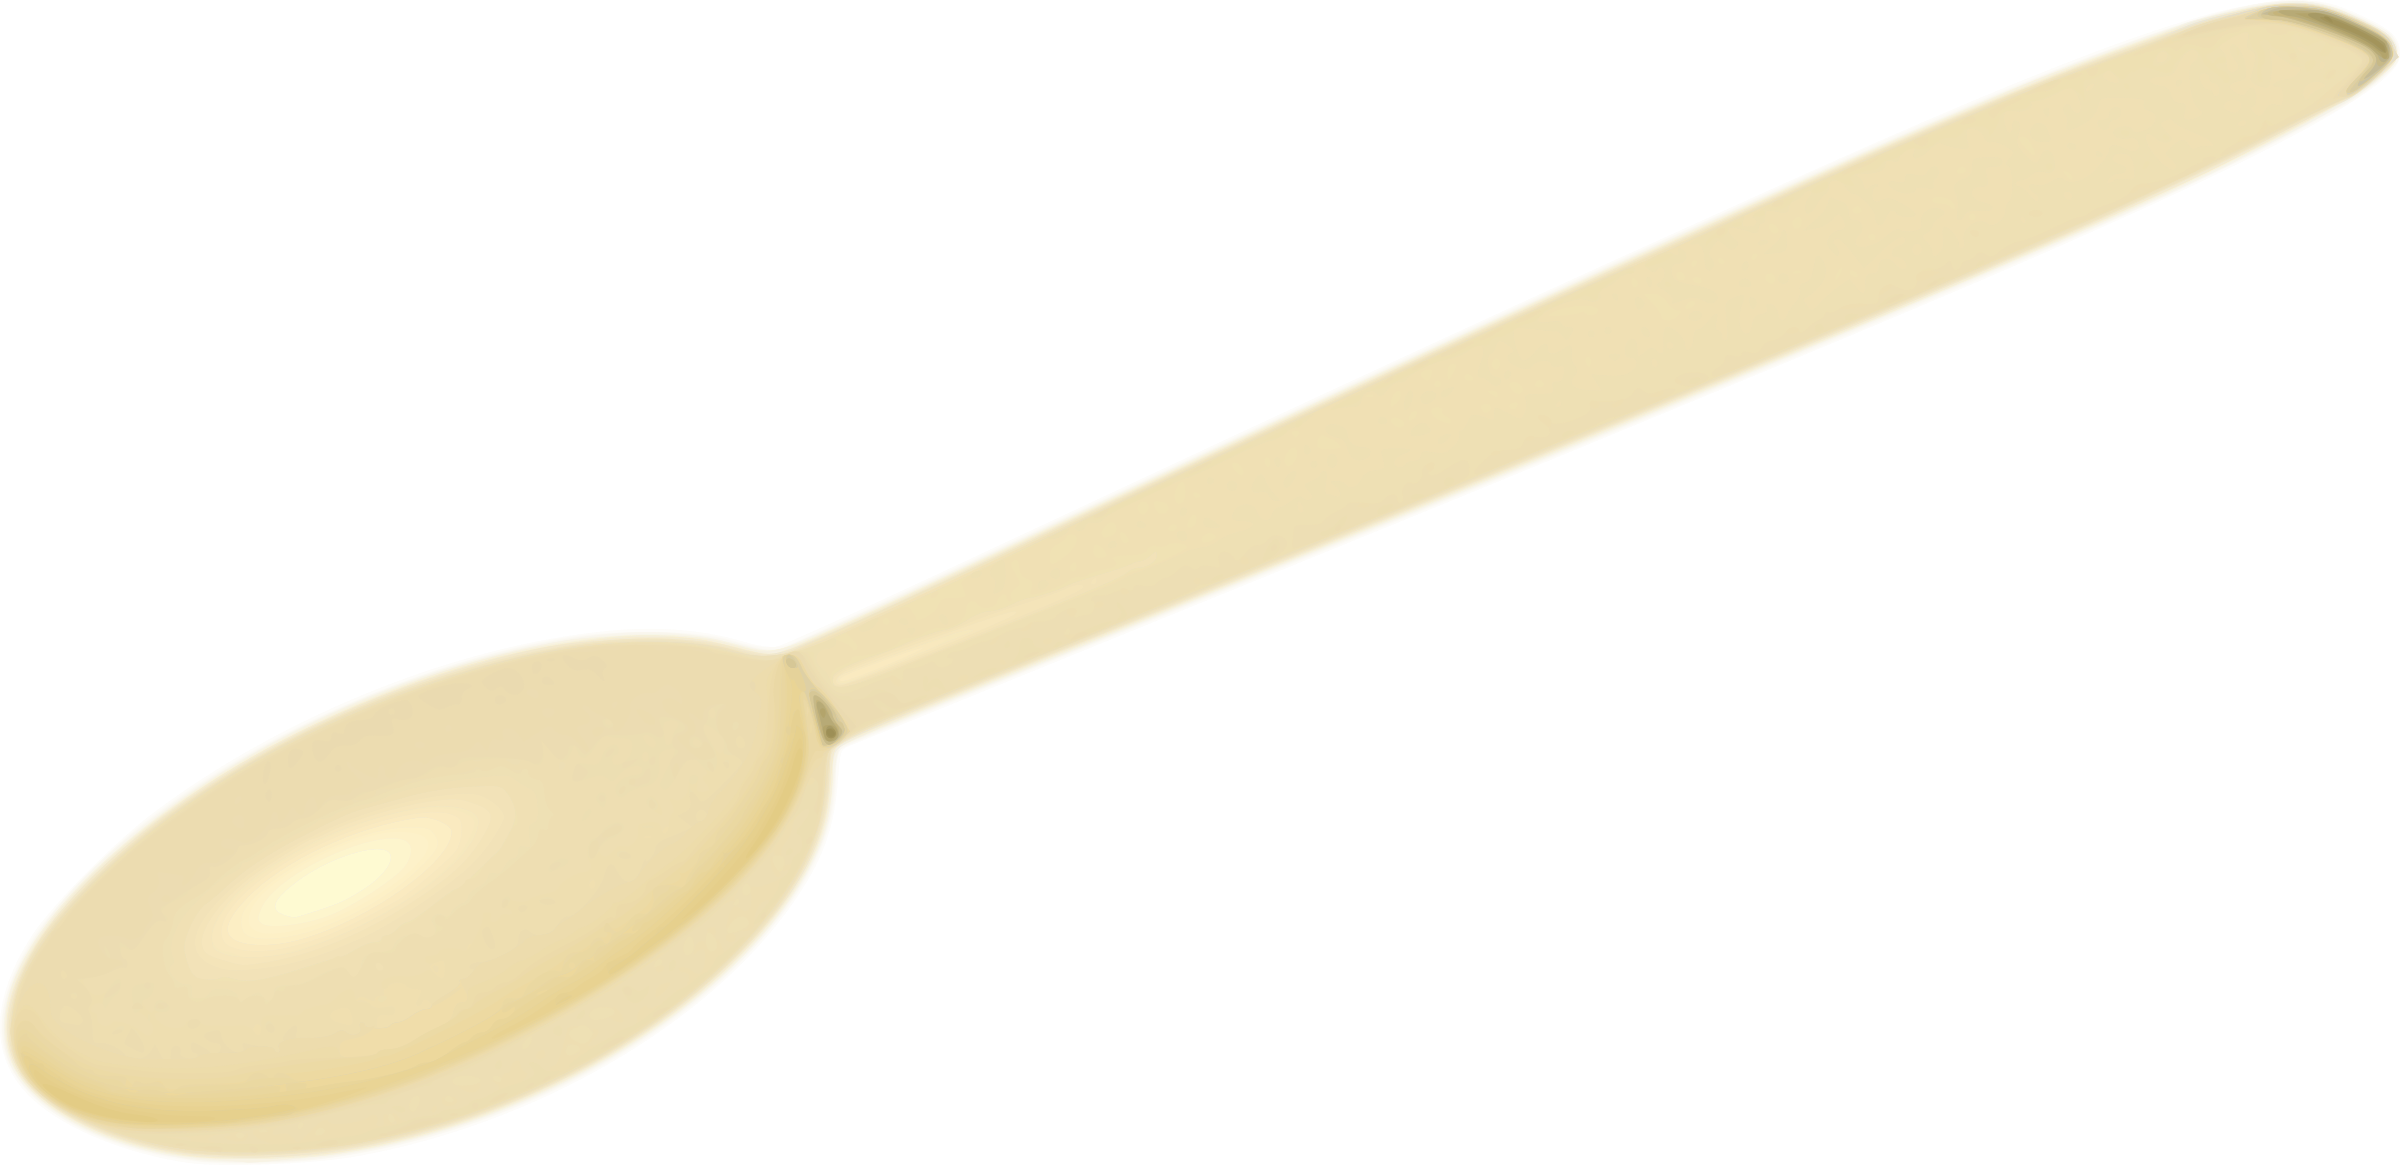 Wooden Spoon By Tobbi